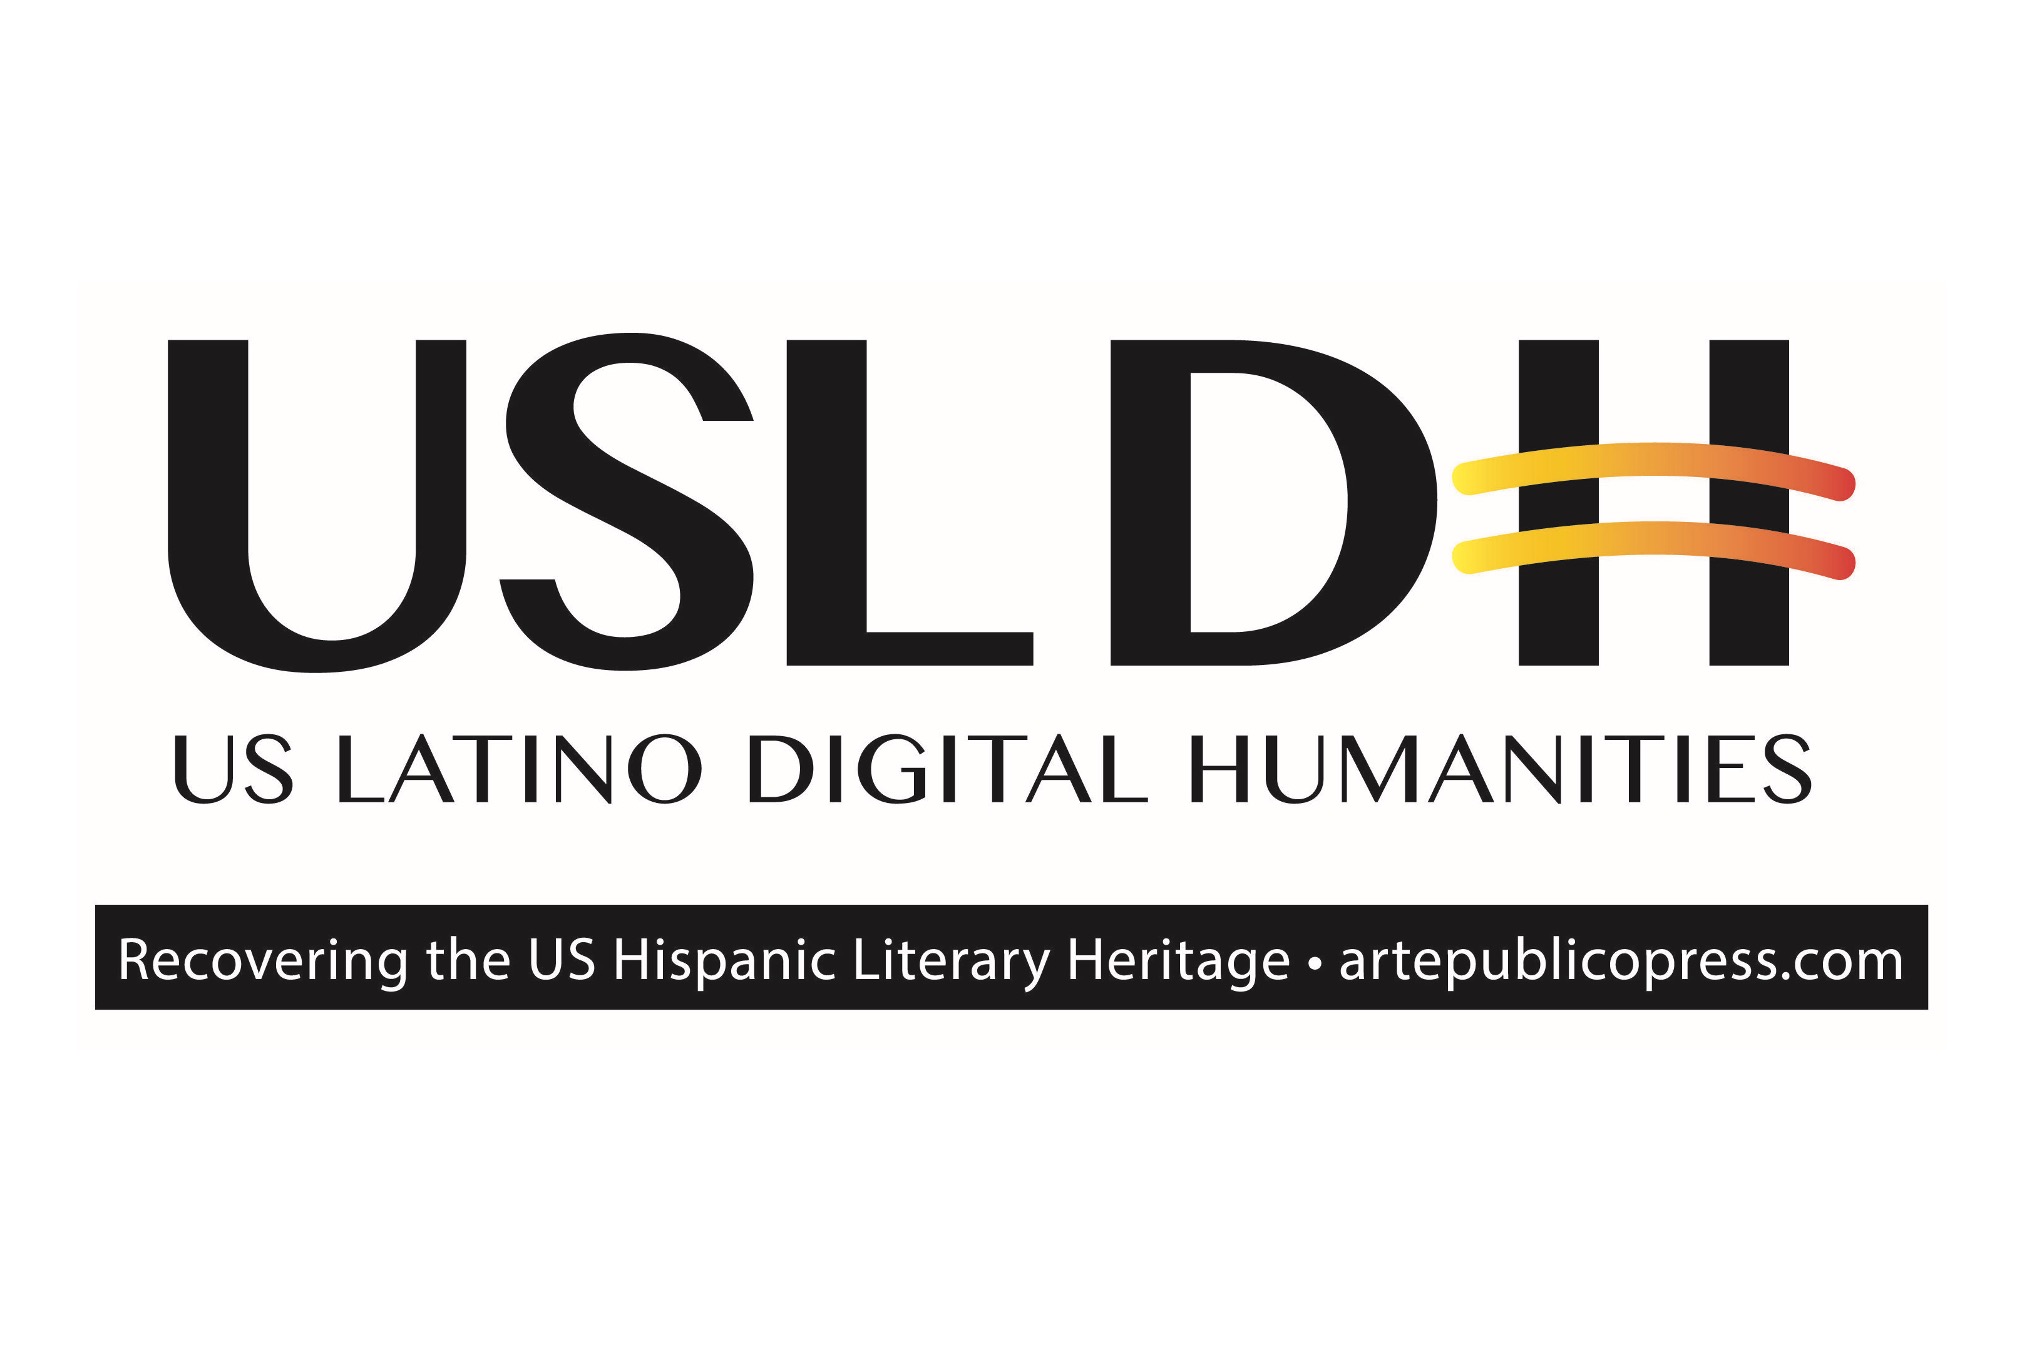 US Latino Digital Humanities (USLDH) Center